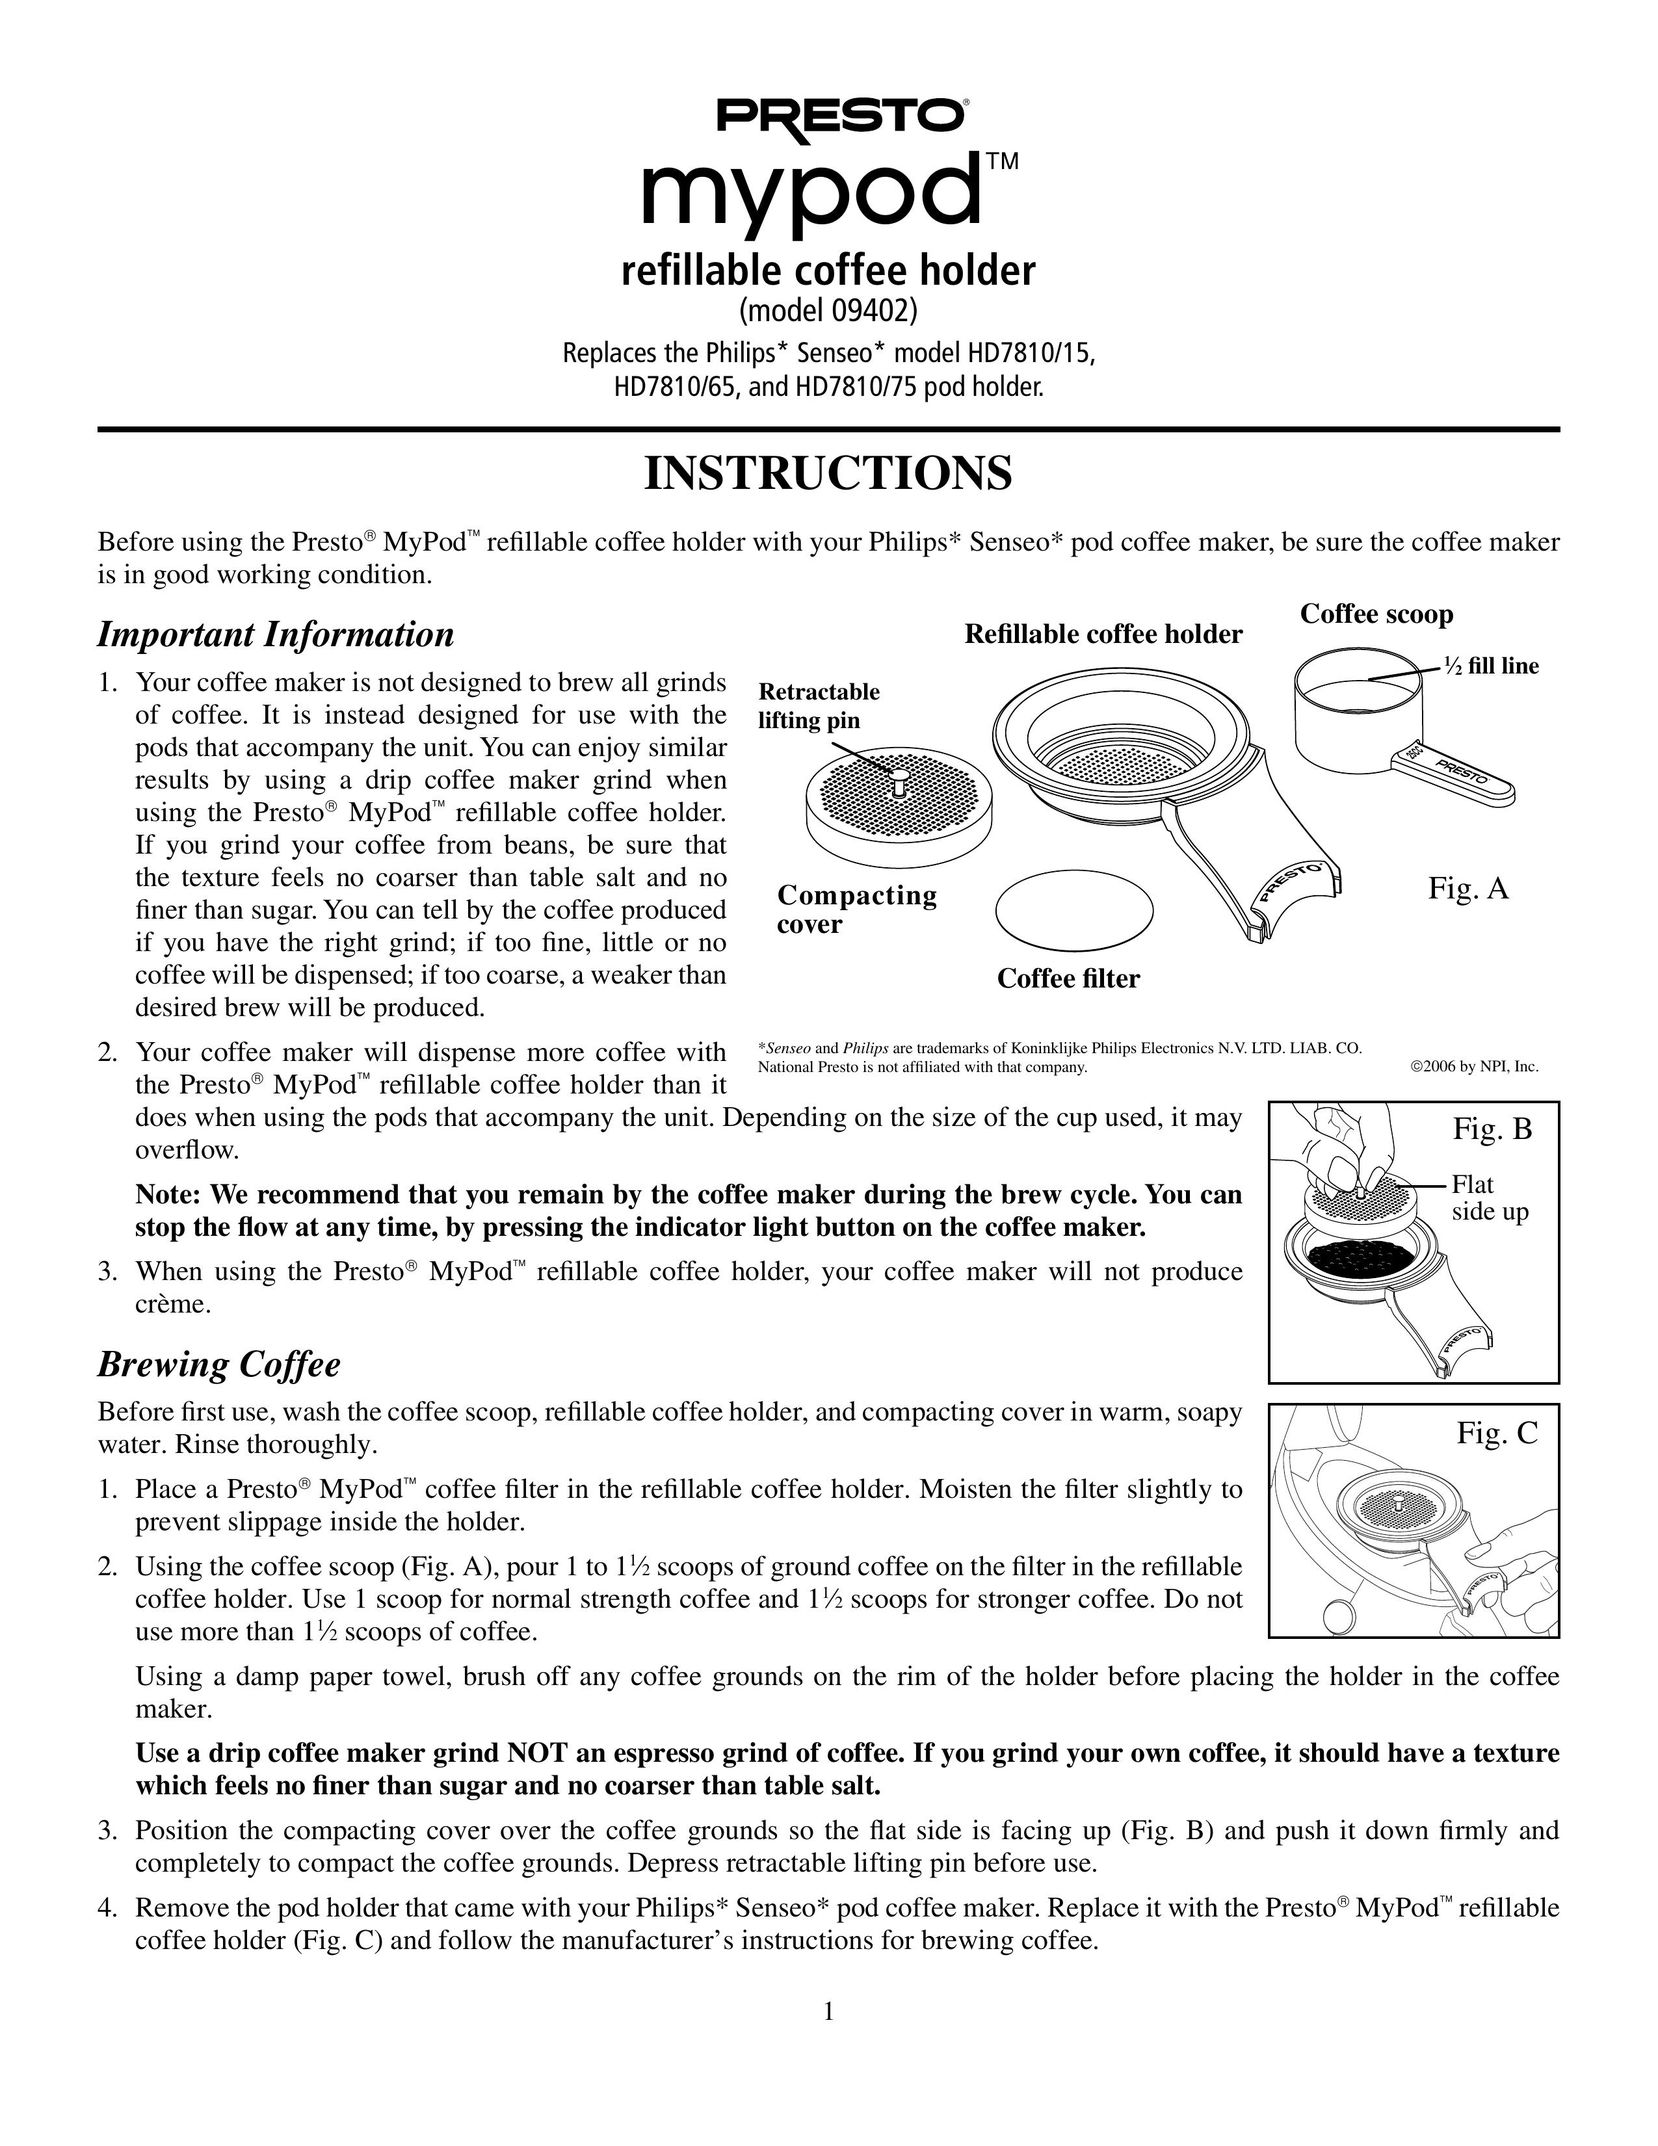 Presto 09402 Coffeemaker User Manual